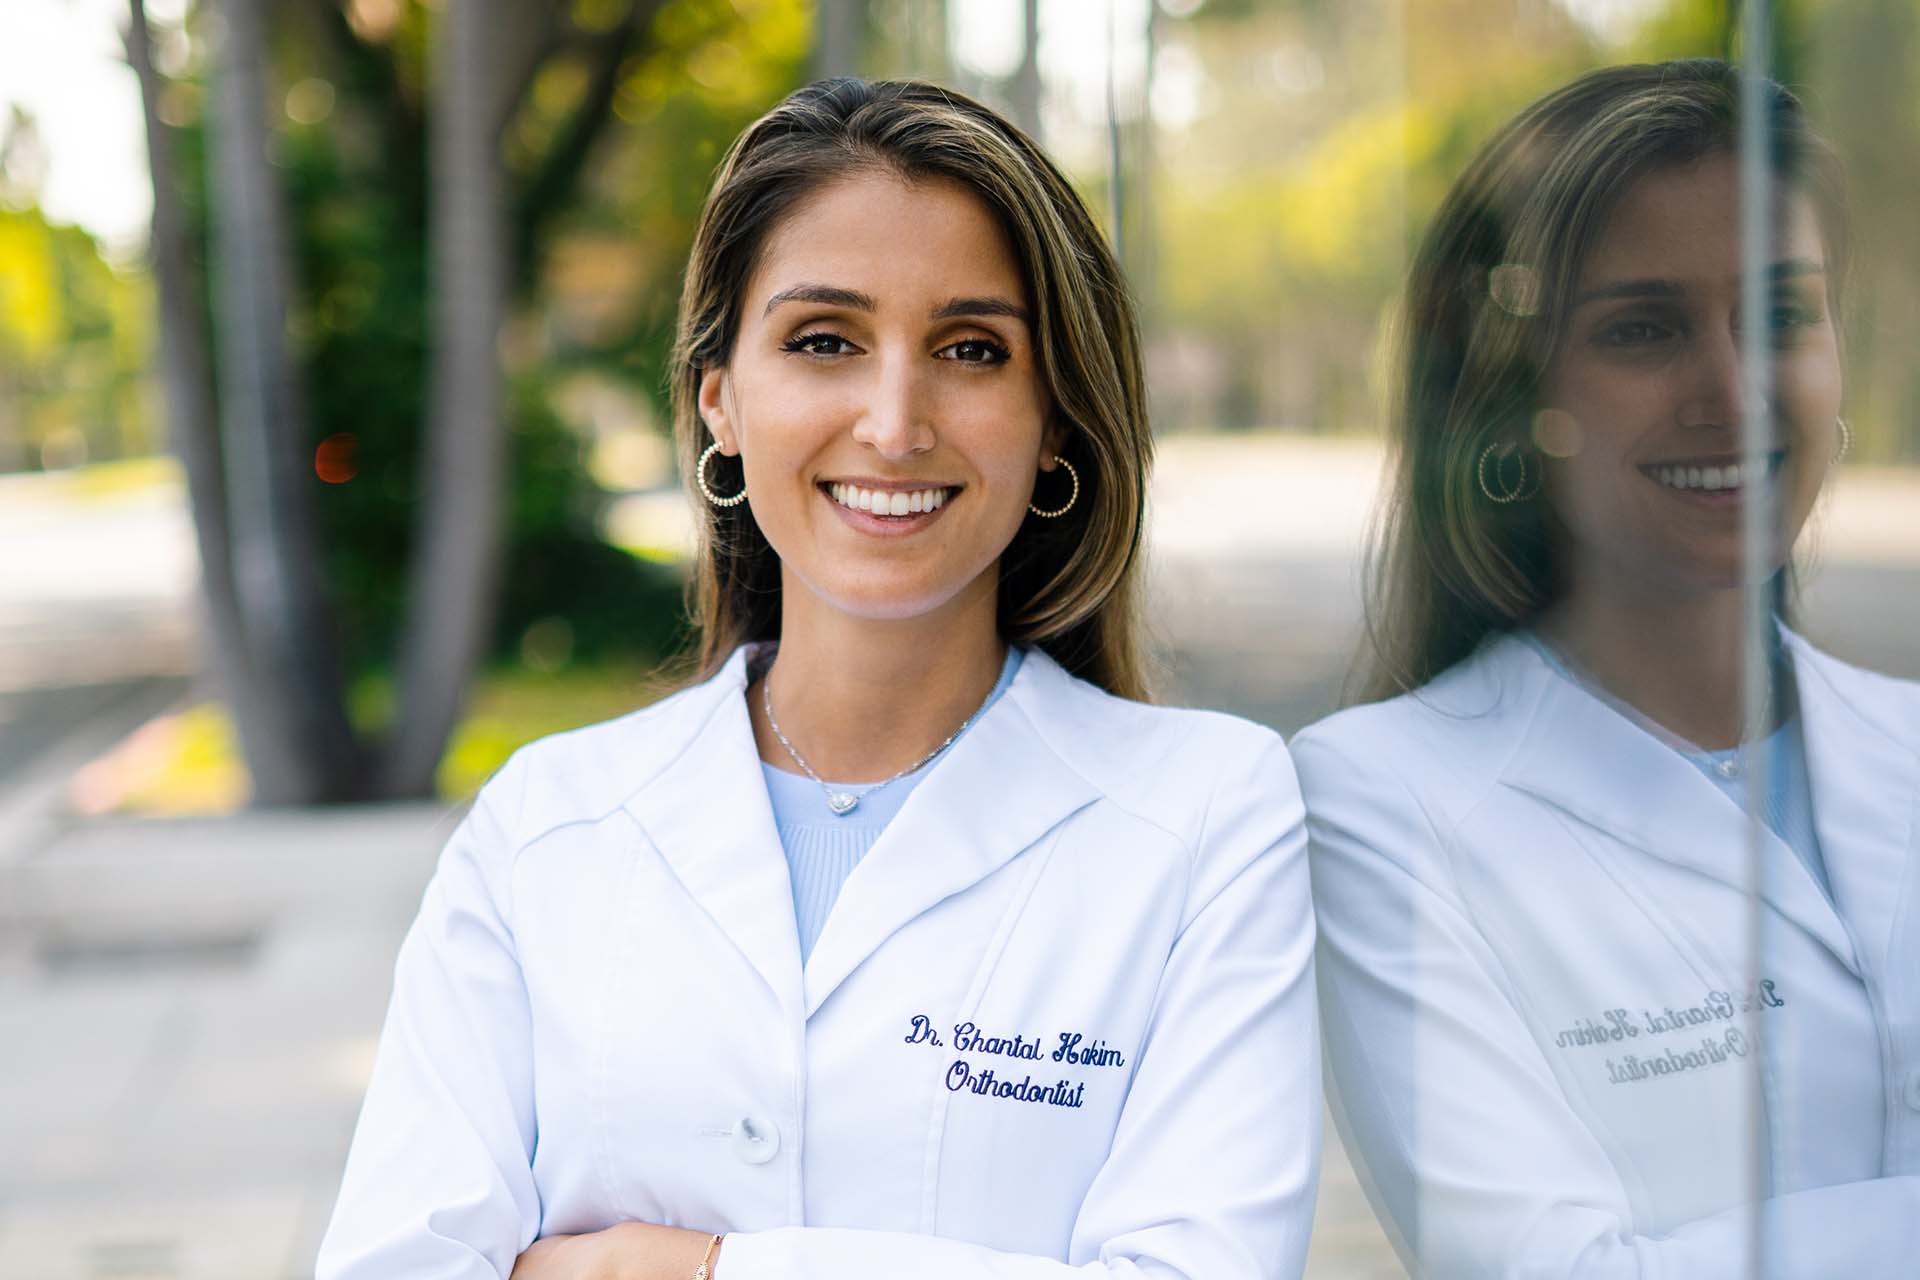 Dr Chantal Hakim of the Orthospaceship - Hakim Orthodontics serving West Hollywood